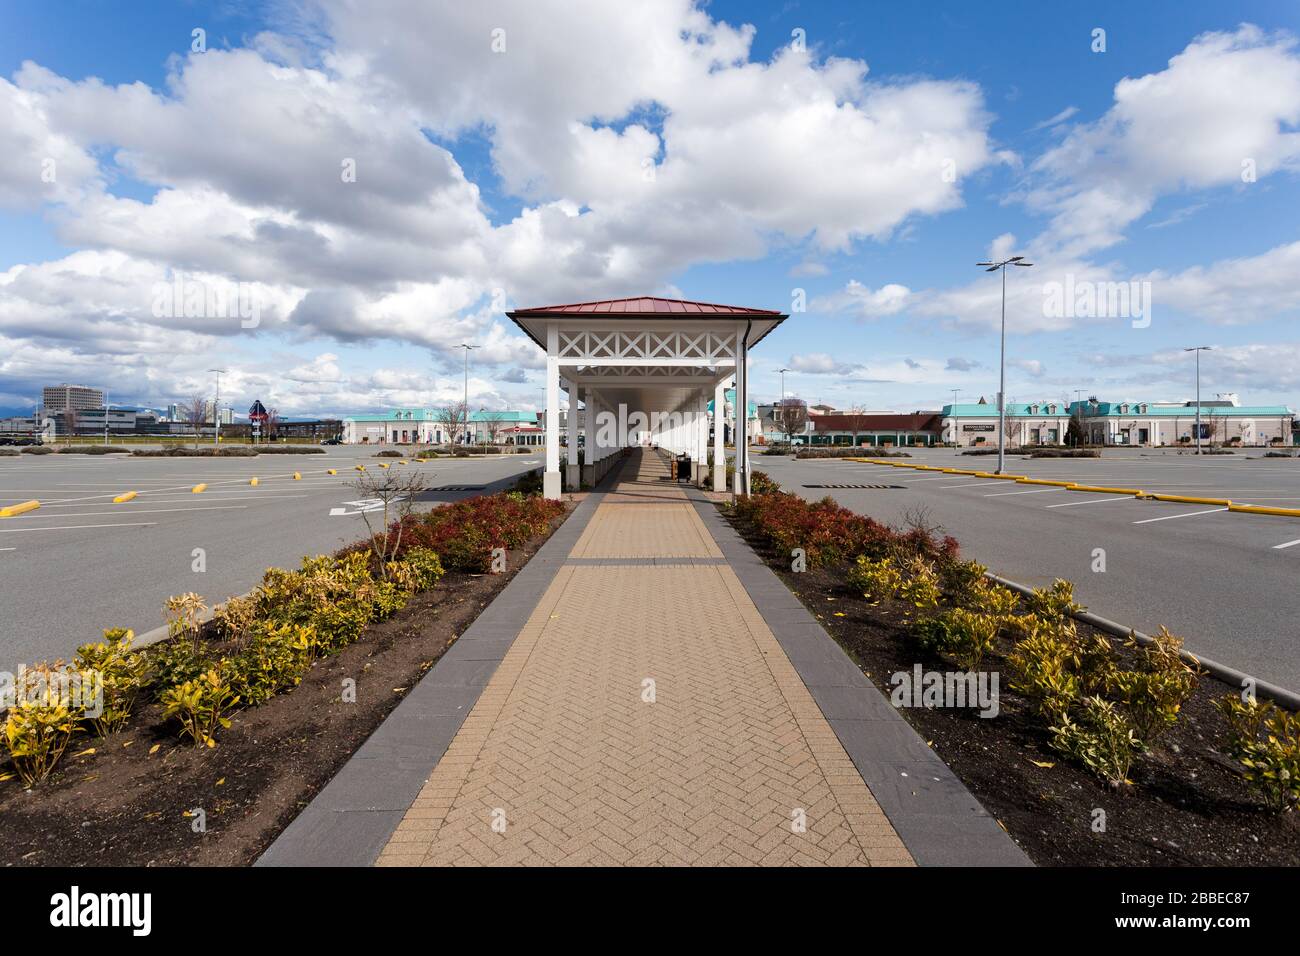 RICHMOND, BC, KANADA - MAR 29, 2020: McArthurGlen Outlet Mall aufgrund der COVID-19-Coronavirus Pandemie völlig leer. Stockfoto